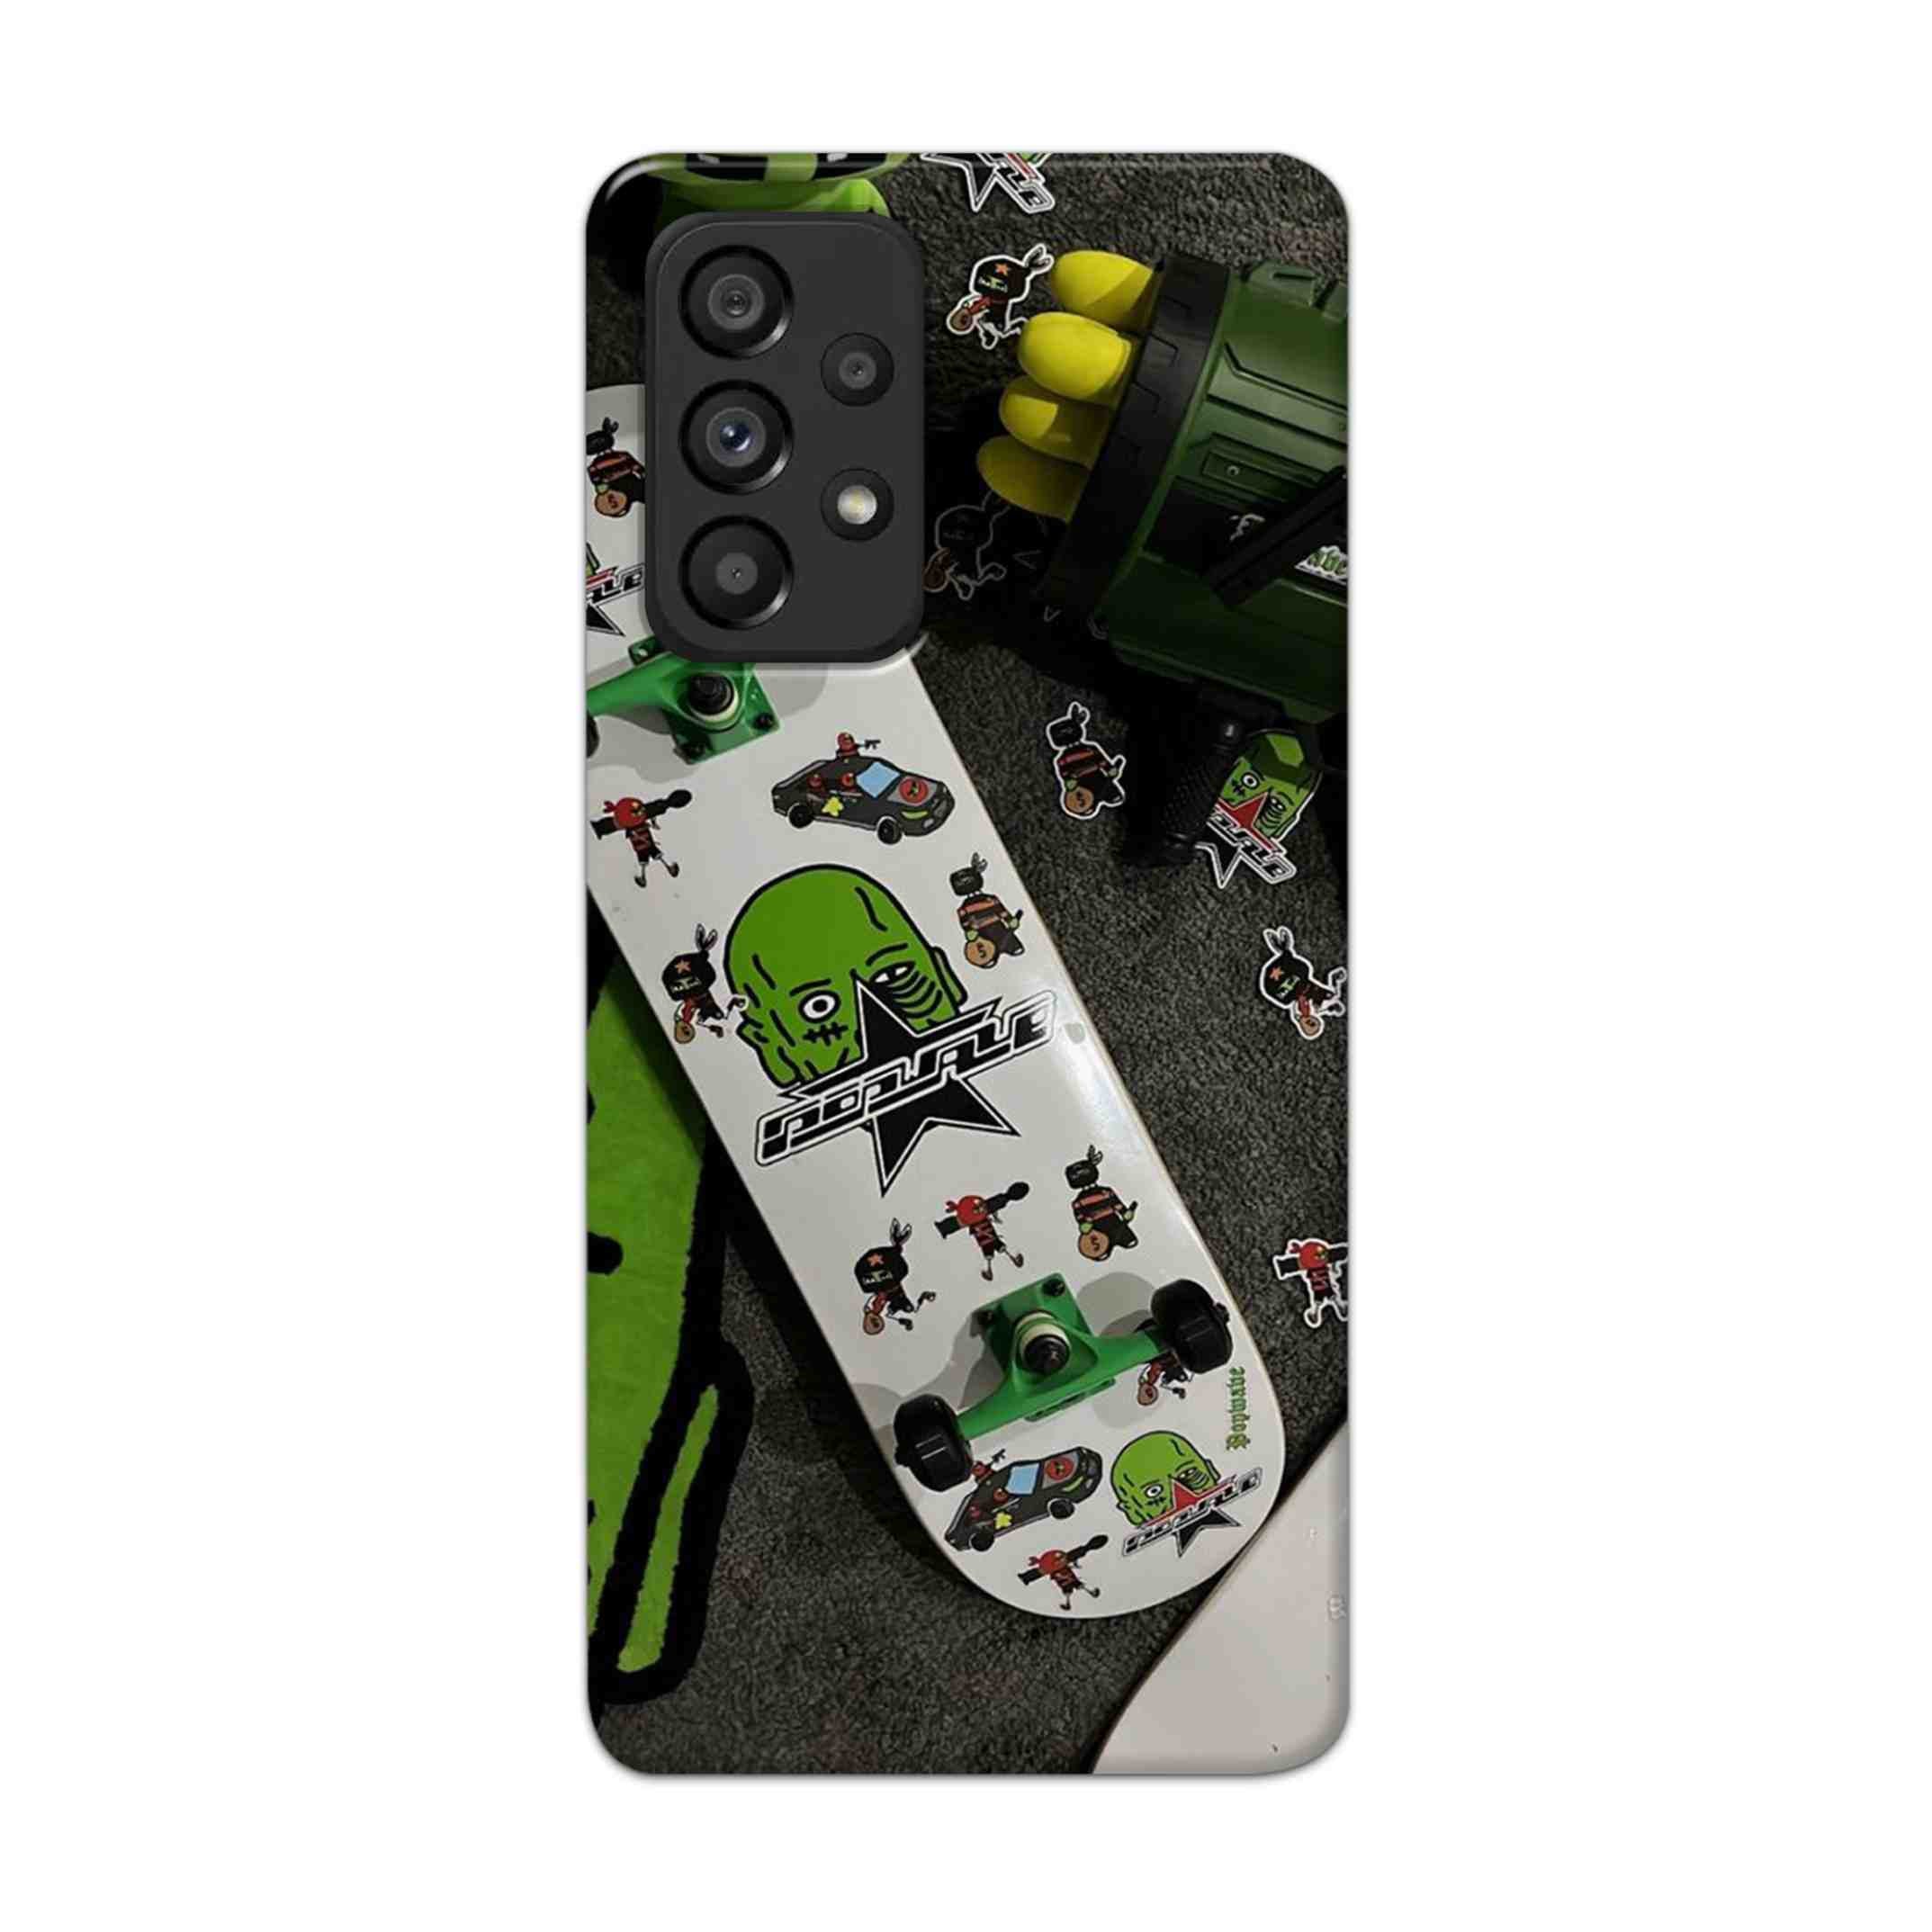 Buy Hulk Skateboard Hard Back Mobile Phone Case Cover For Samsung Galaxy A53 5G Online